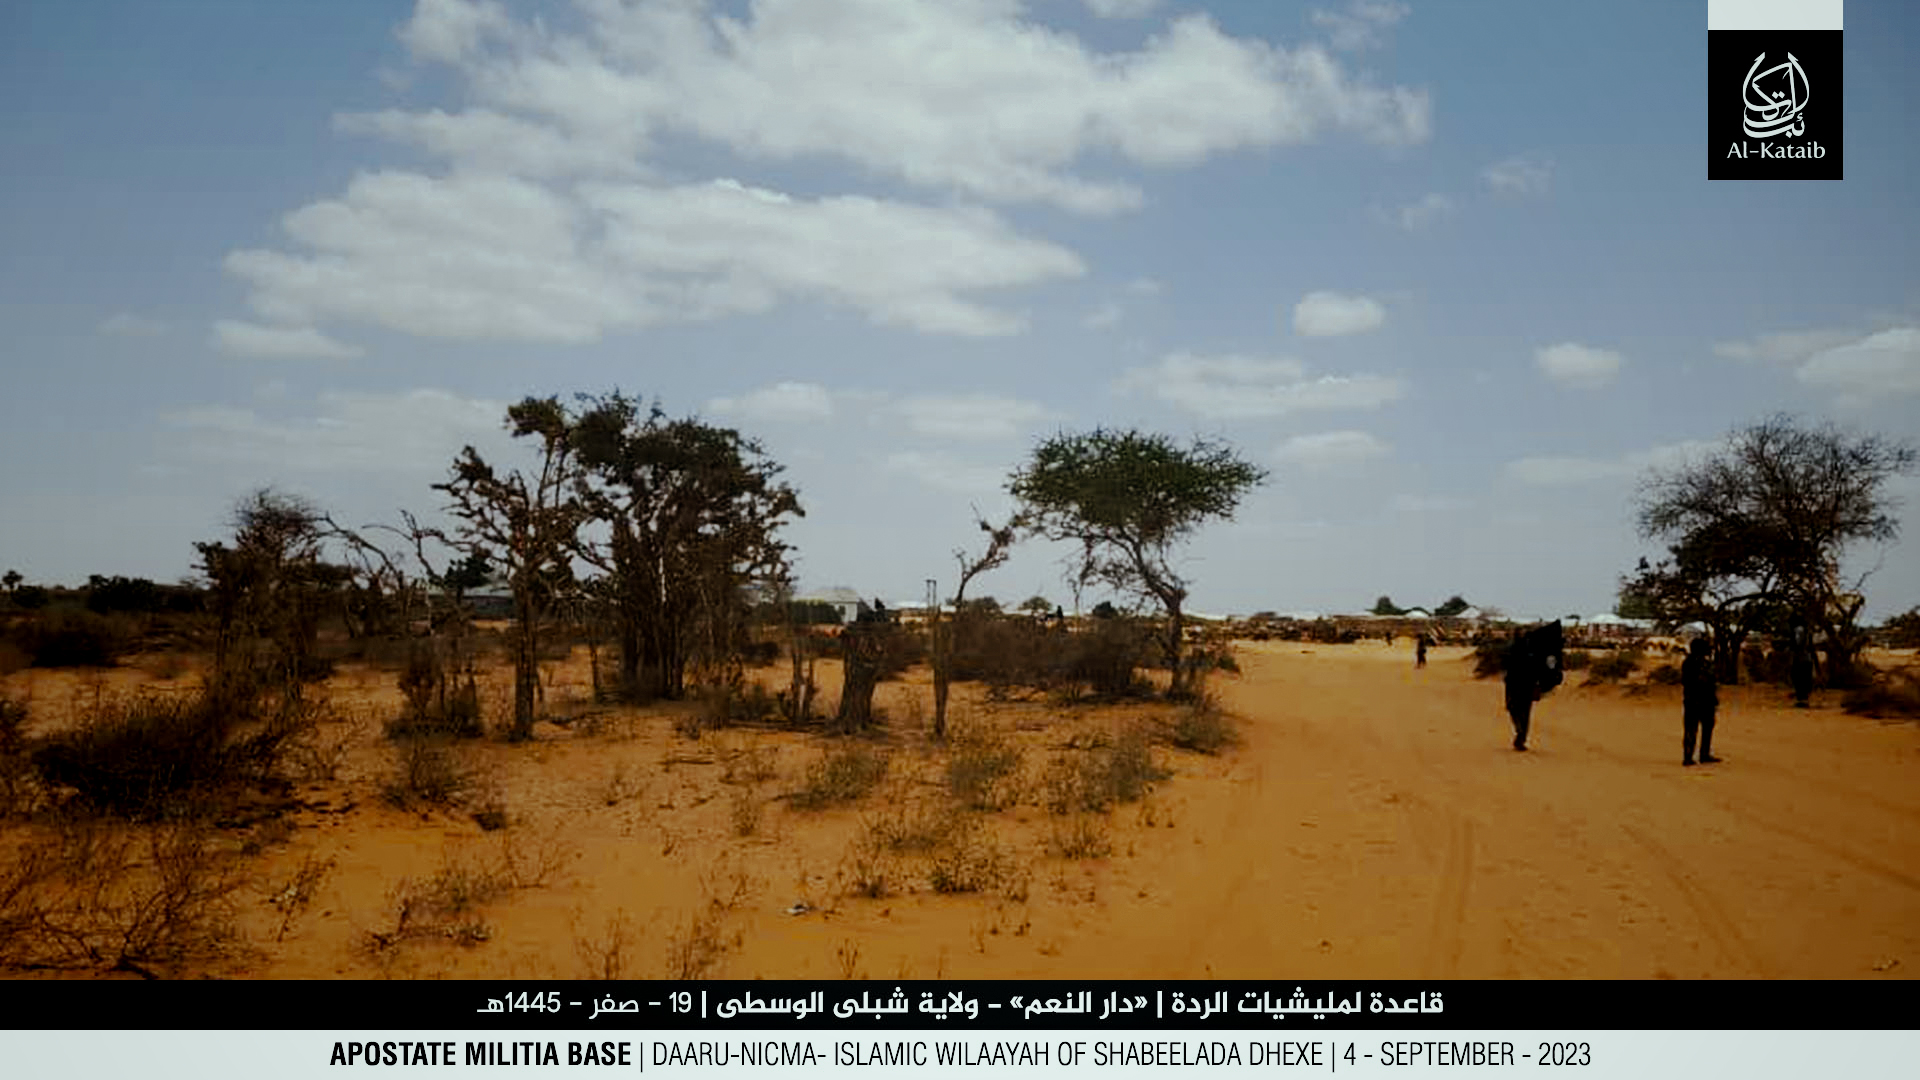 (Photos) Al-Shabaab News Agency, Shahada News, Publishes Photos of Capture of Dar Al-Nama Base in Middle Shabelle, Somalia - 5 September 2023